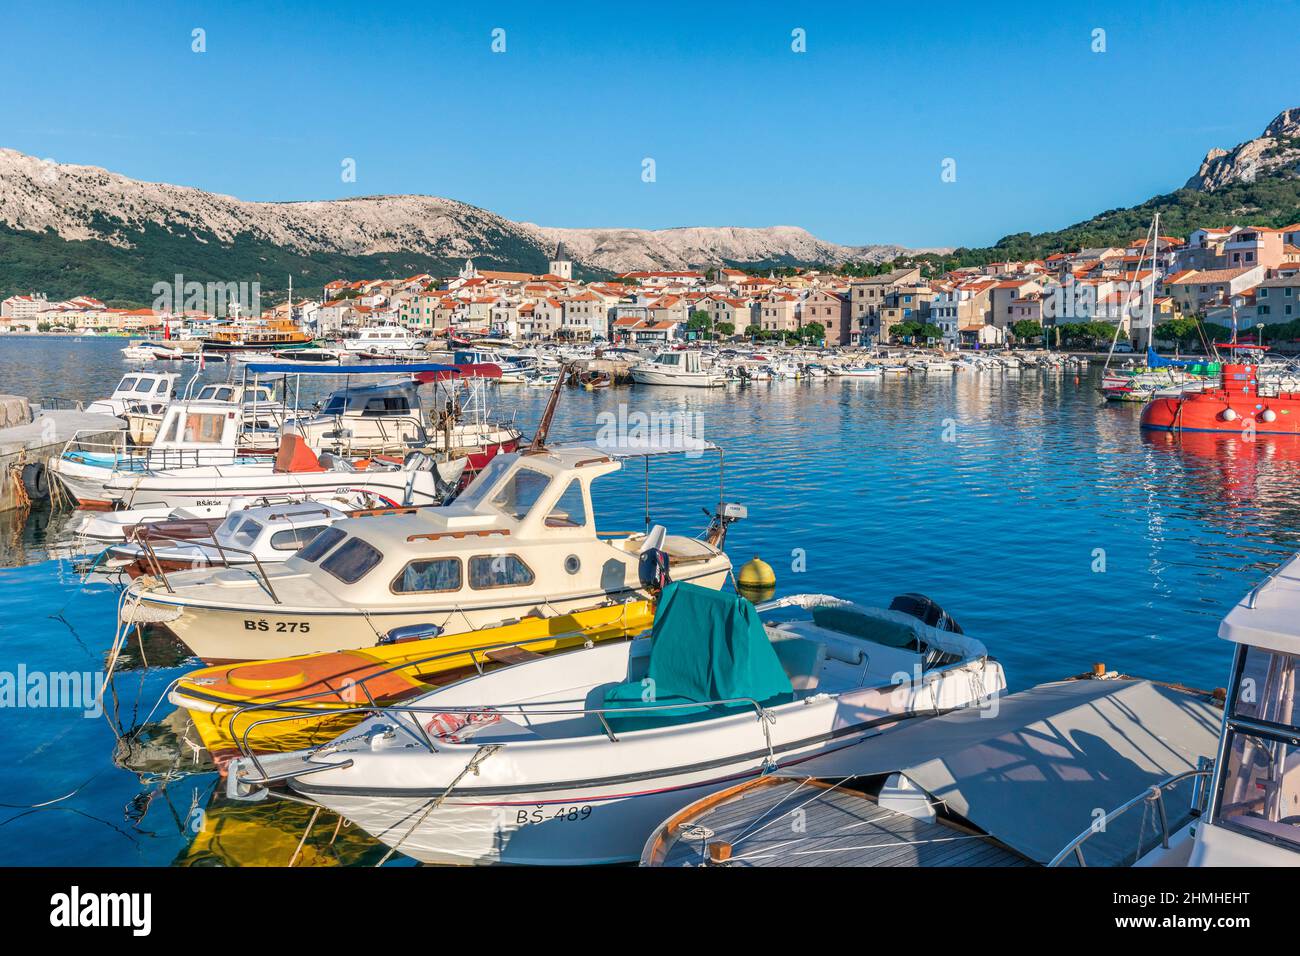 Croatia, Kvarner bay, island of Krk, Adriatic coast, the tourist resort of Baska, marina view with boats Stock Photo